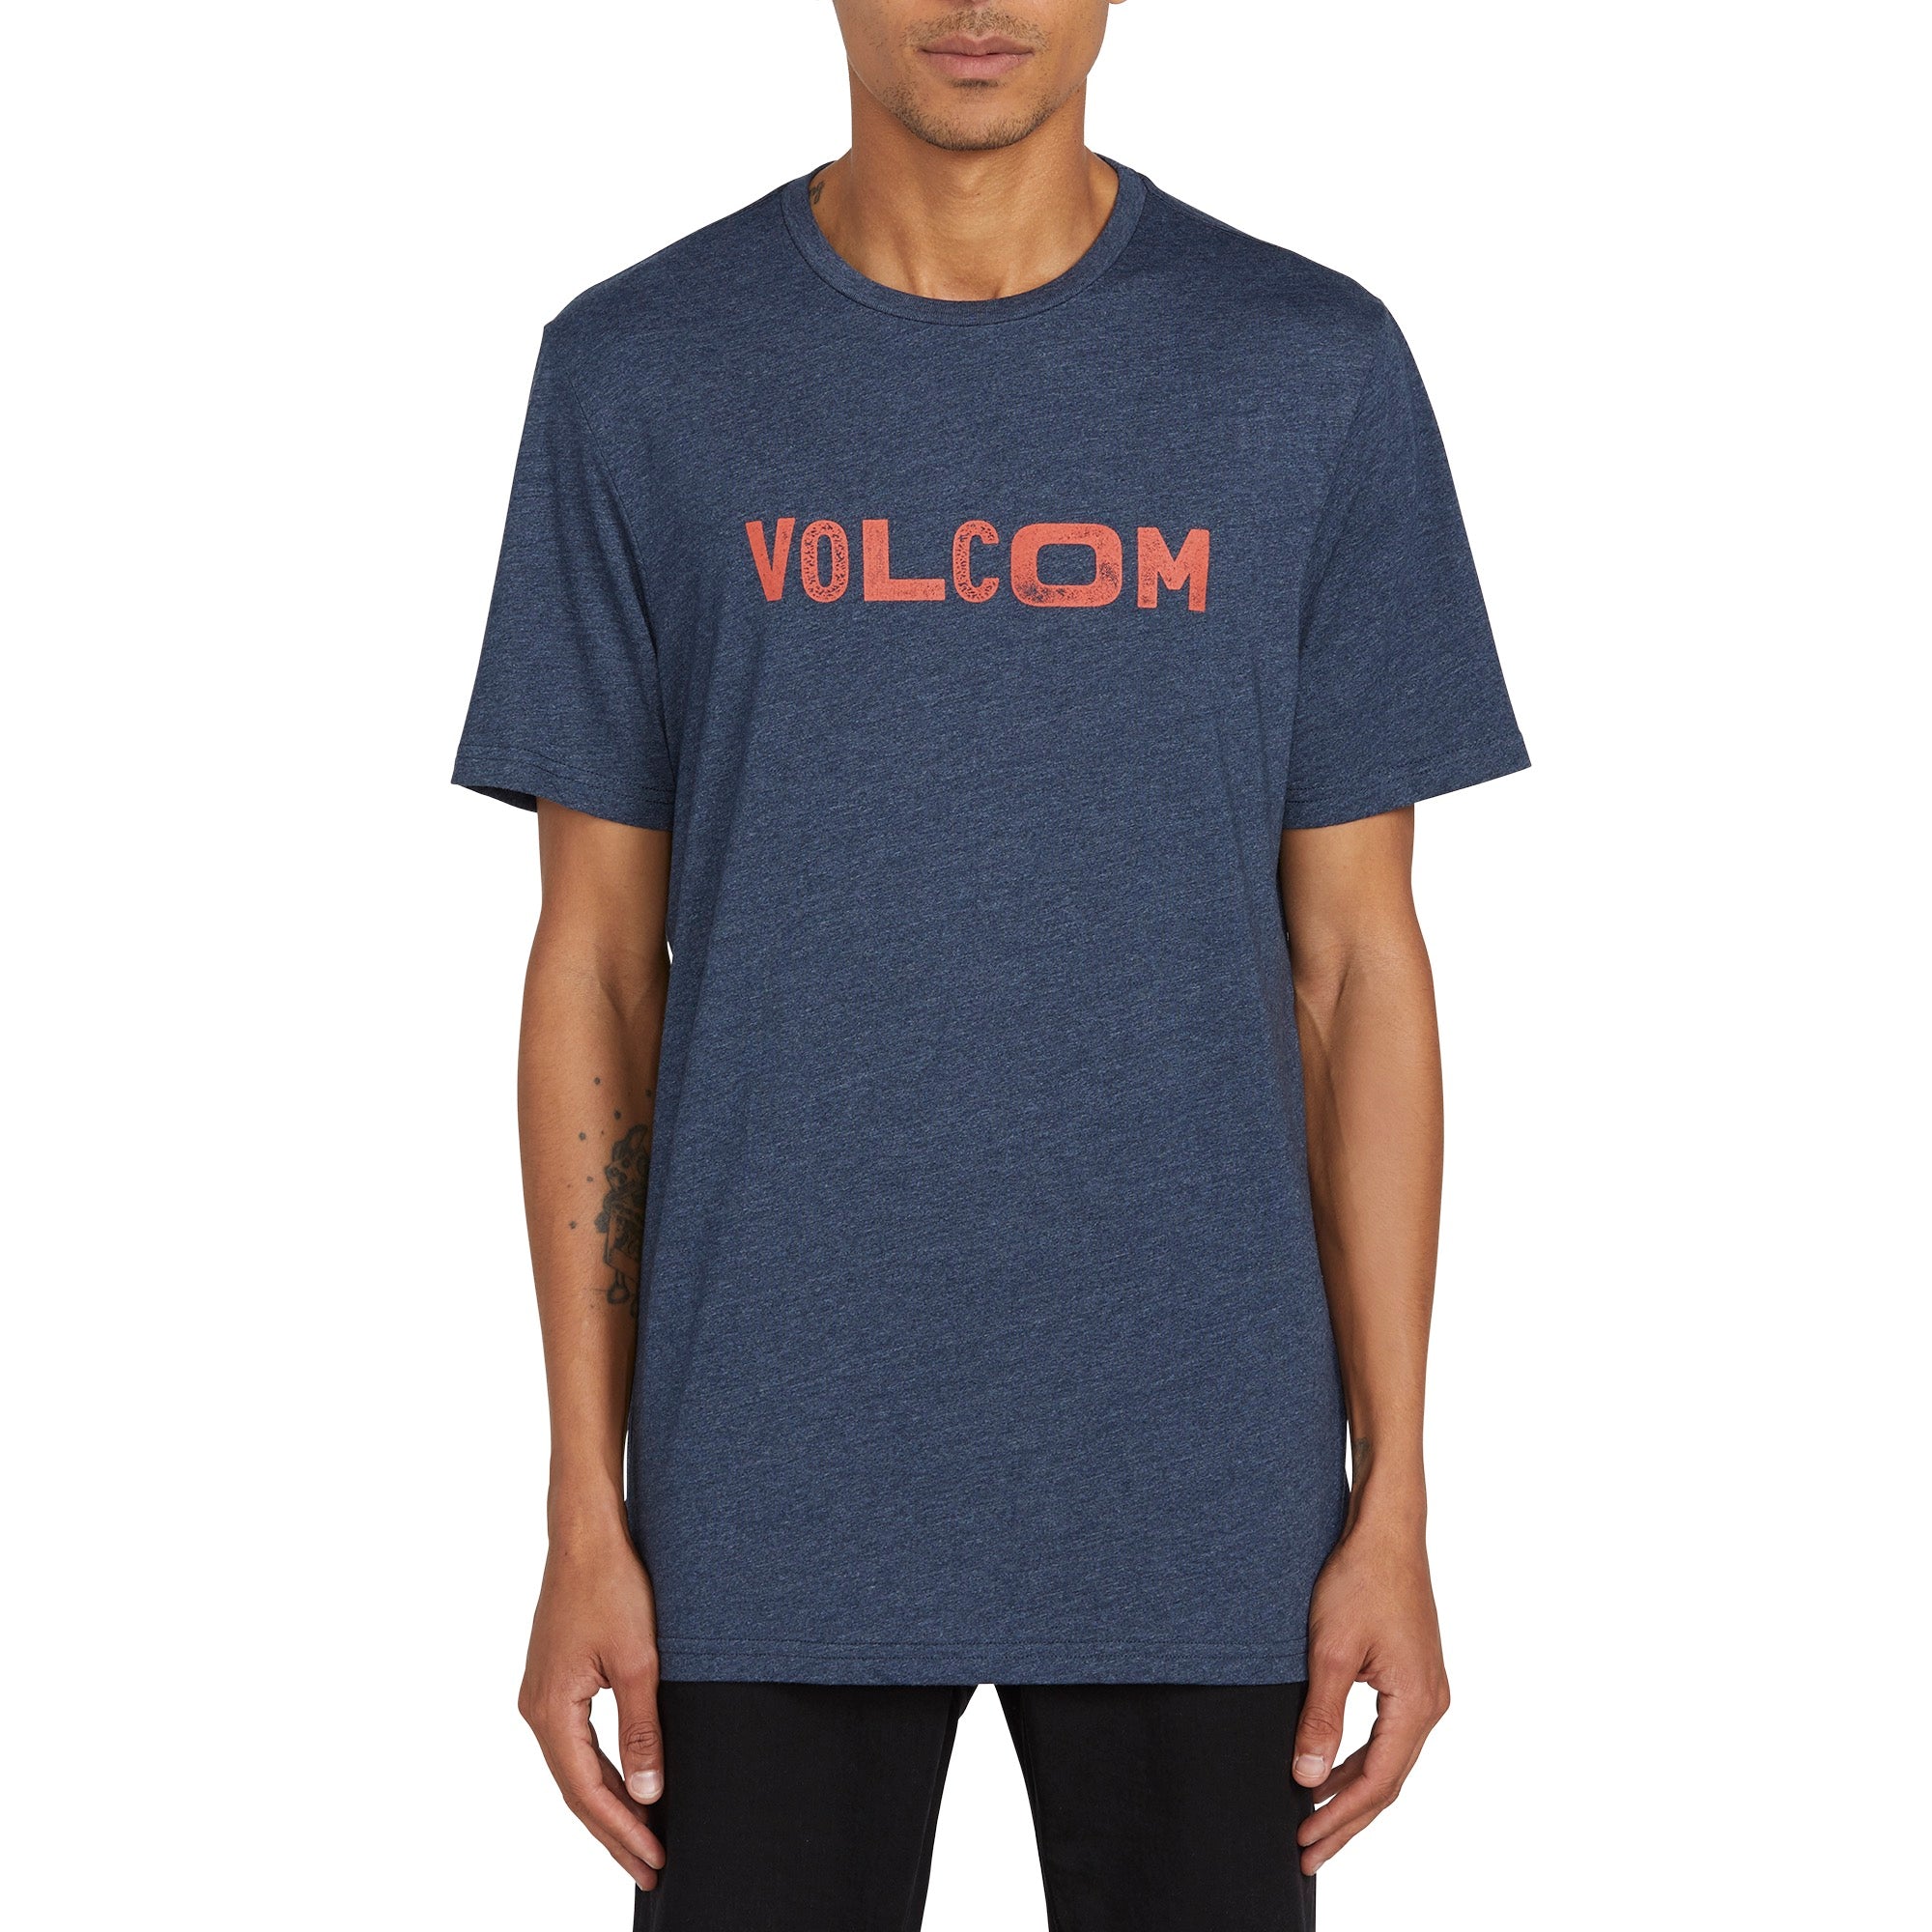 Volcom Reply T-Shirt - 88 Gear